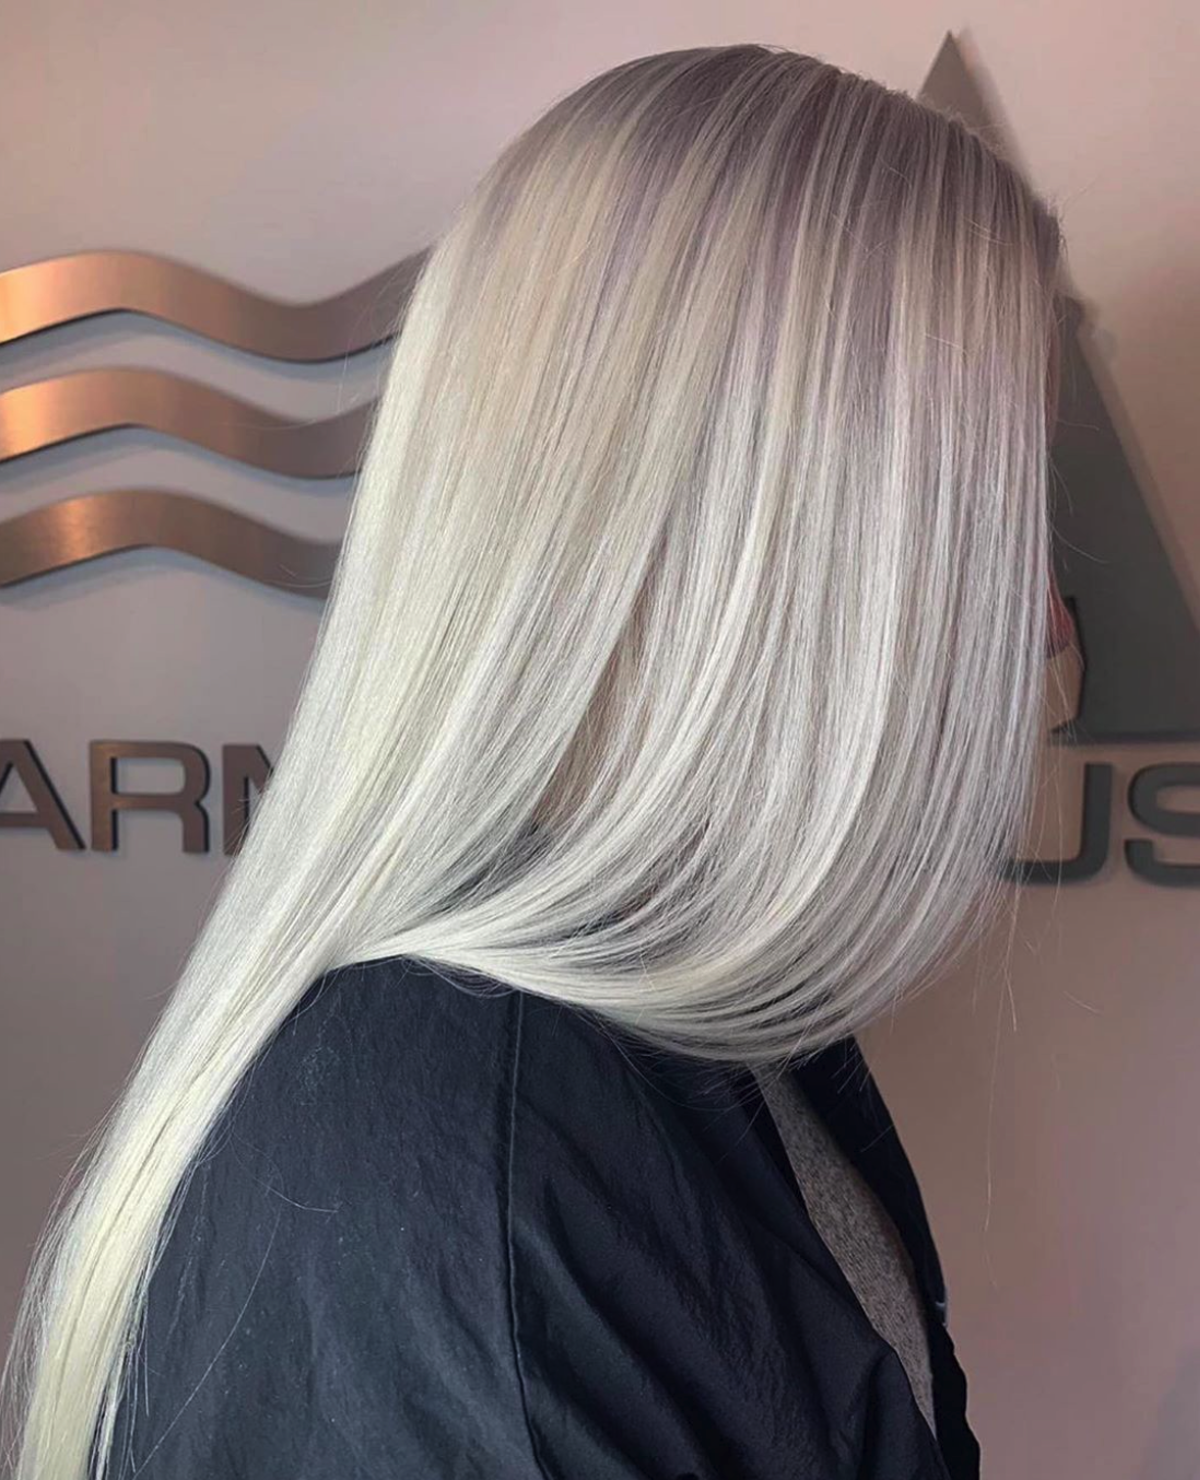 Platinum blonde and hairstyle by Salon Armandeus Orlando